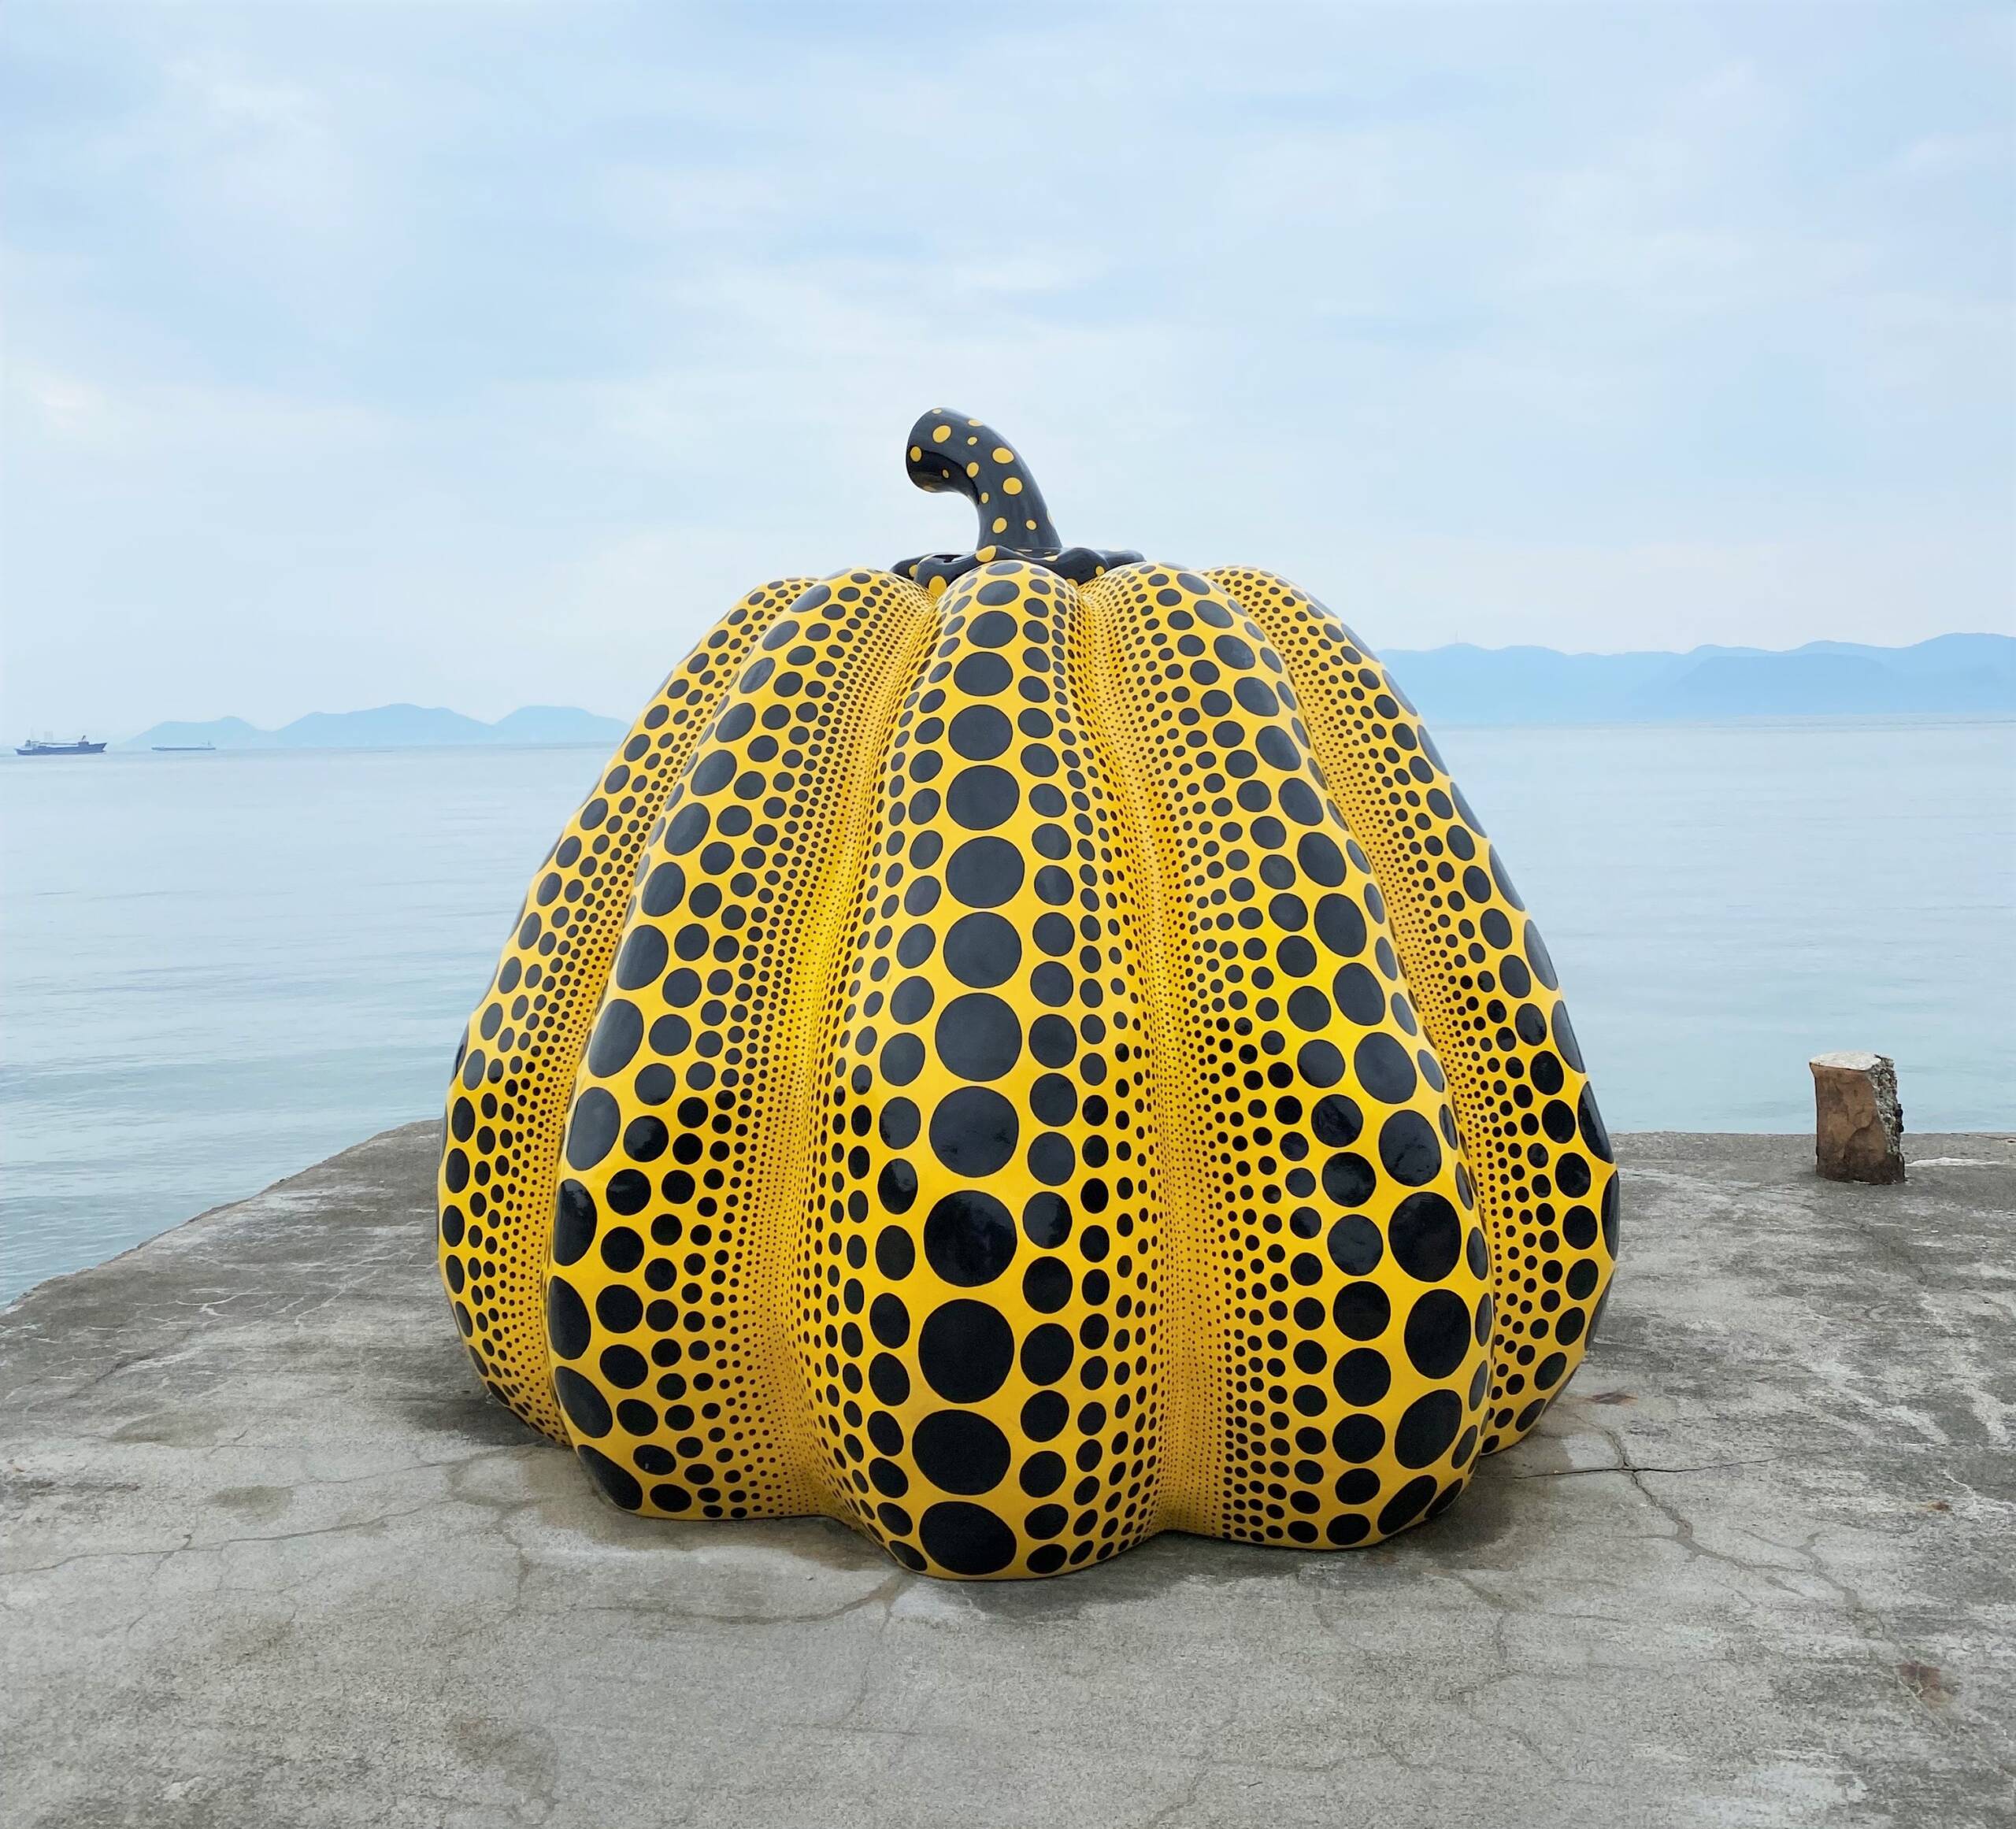 Yayoi Kusama's pumpkin returns to Naoshima island after typhoon